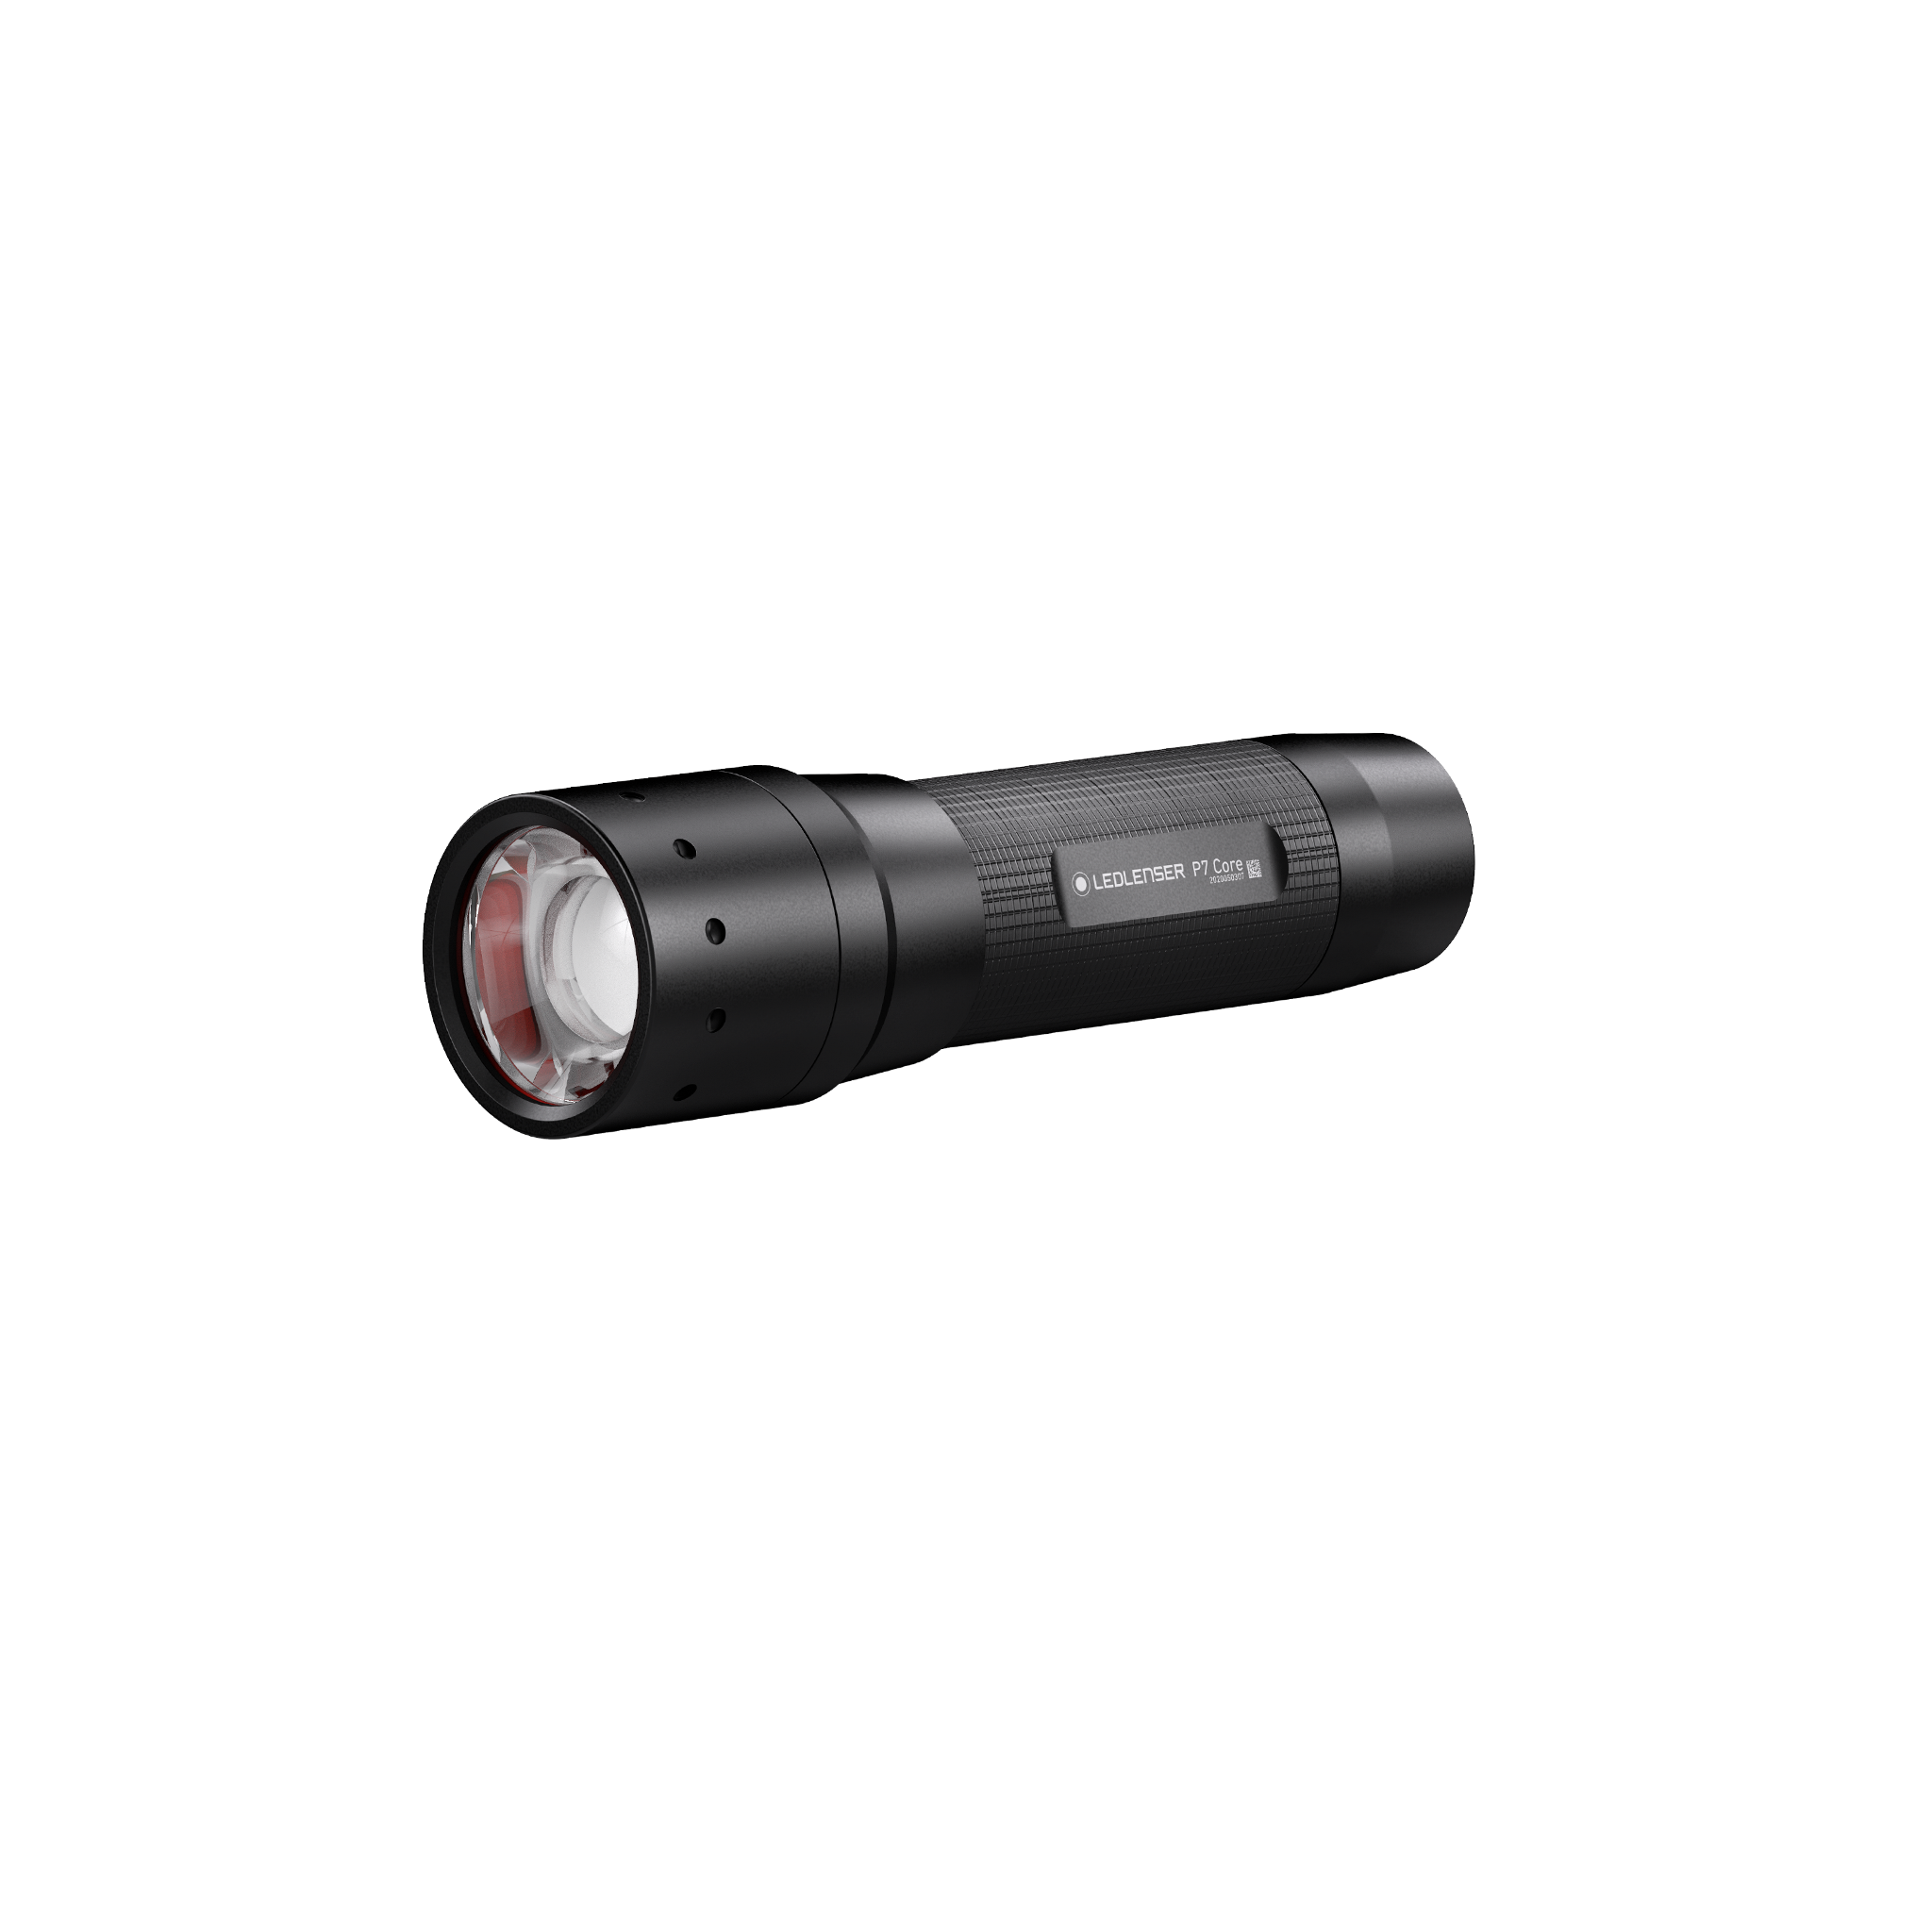  Ledlenser P7 allround torch LED, 450 lumens, focusable, 300m  long distance beam, 4xAAA battery powered, incl. batteries : Tools & Home  Improvement